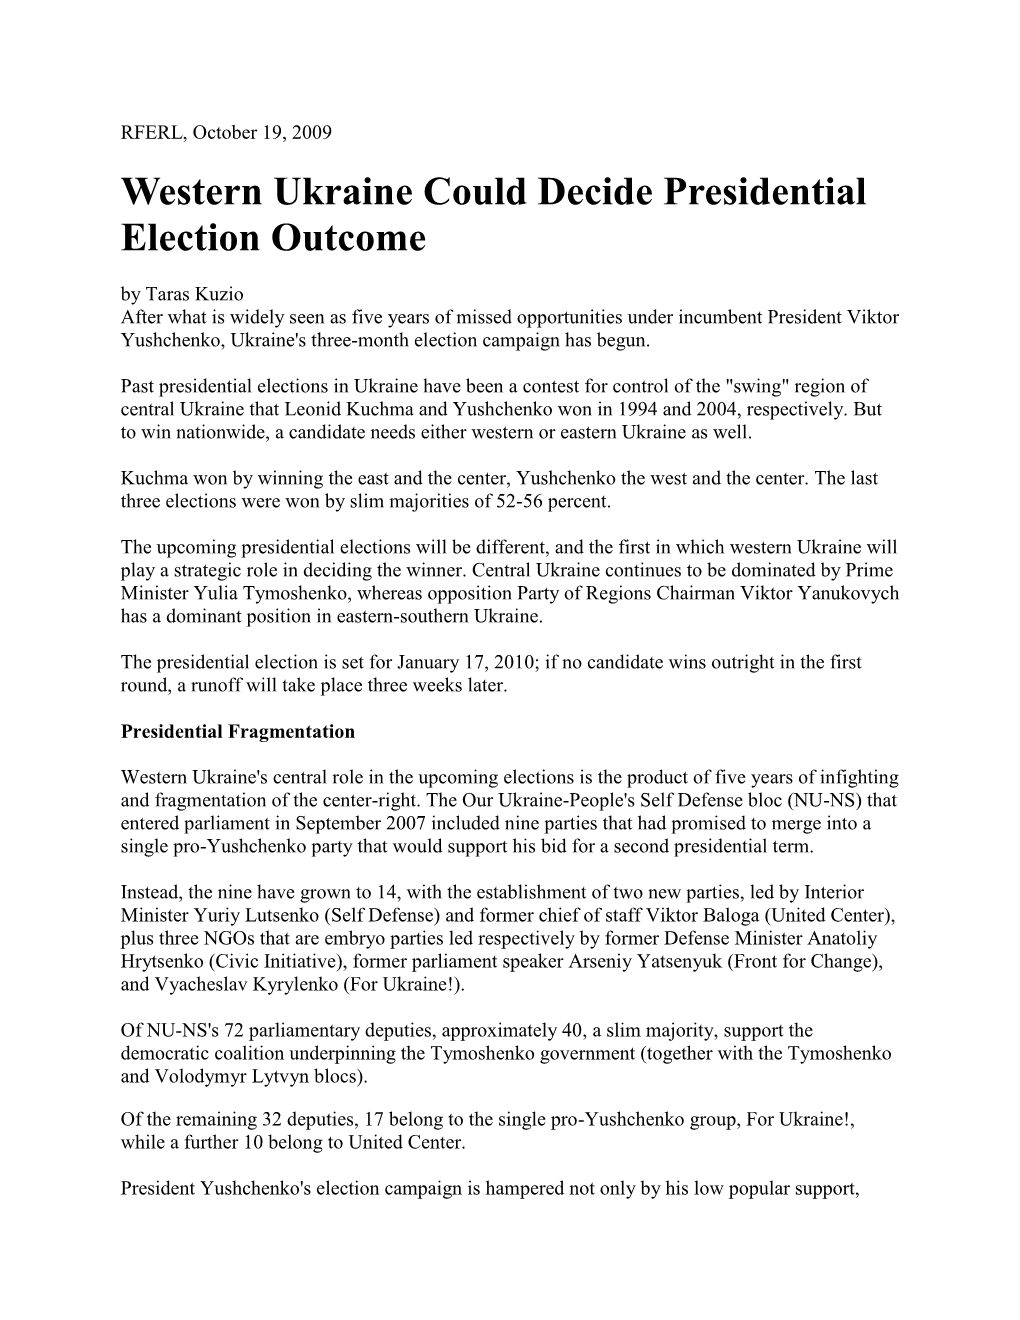 Western Ukraine Could Decide Presidential Election